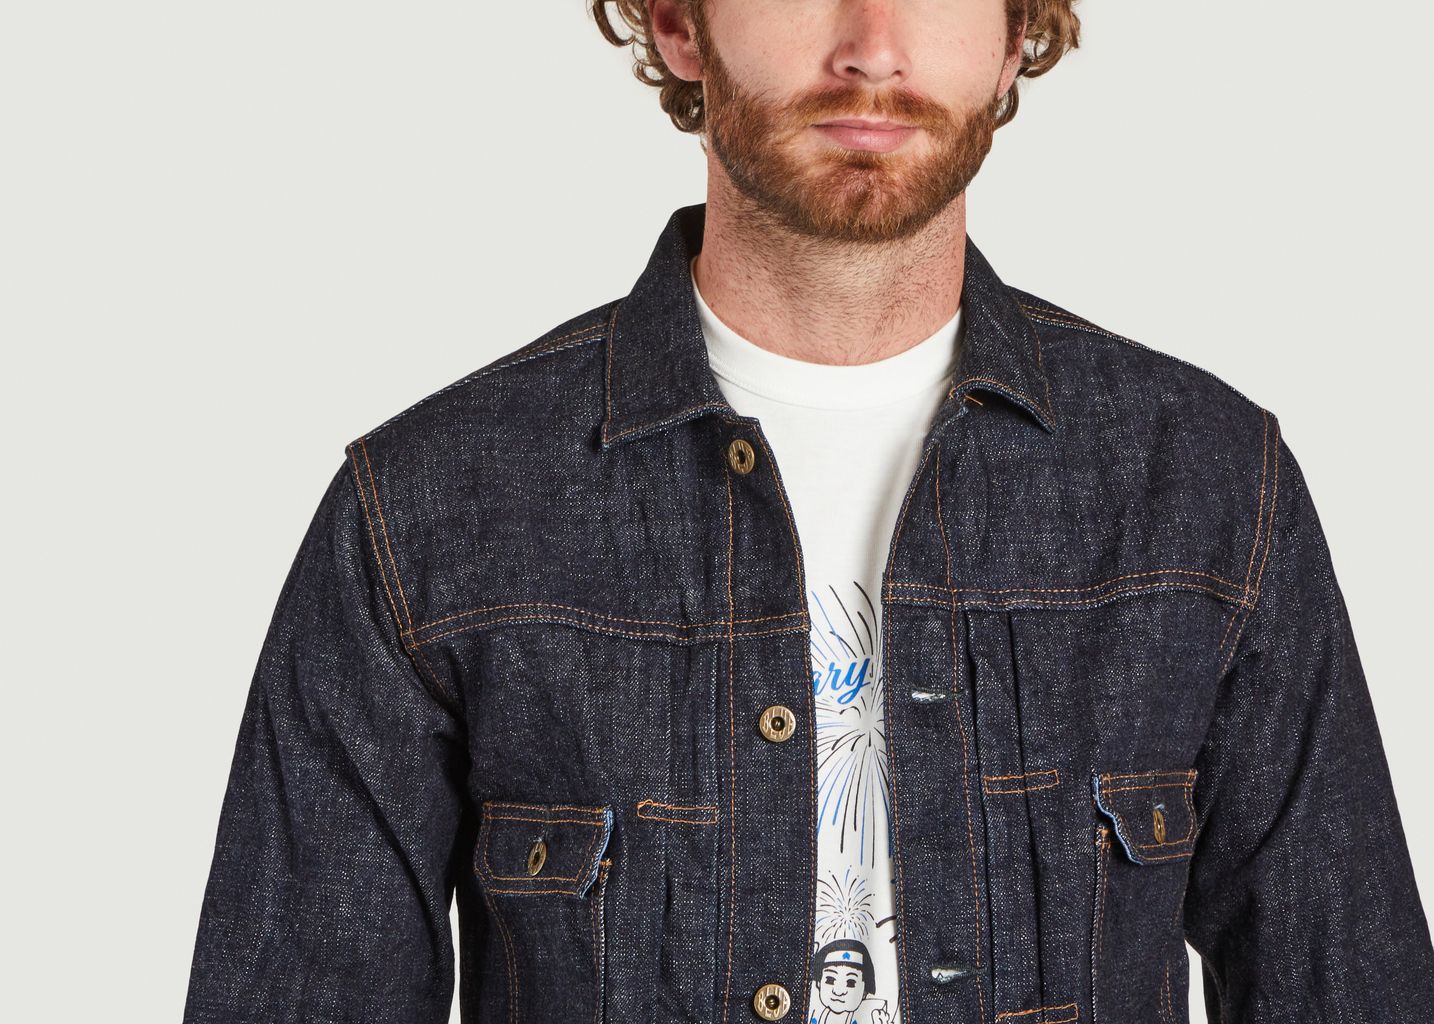 Straight fit brt denim jacket - Japan Blue Jeans